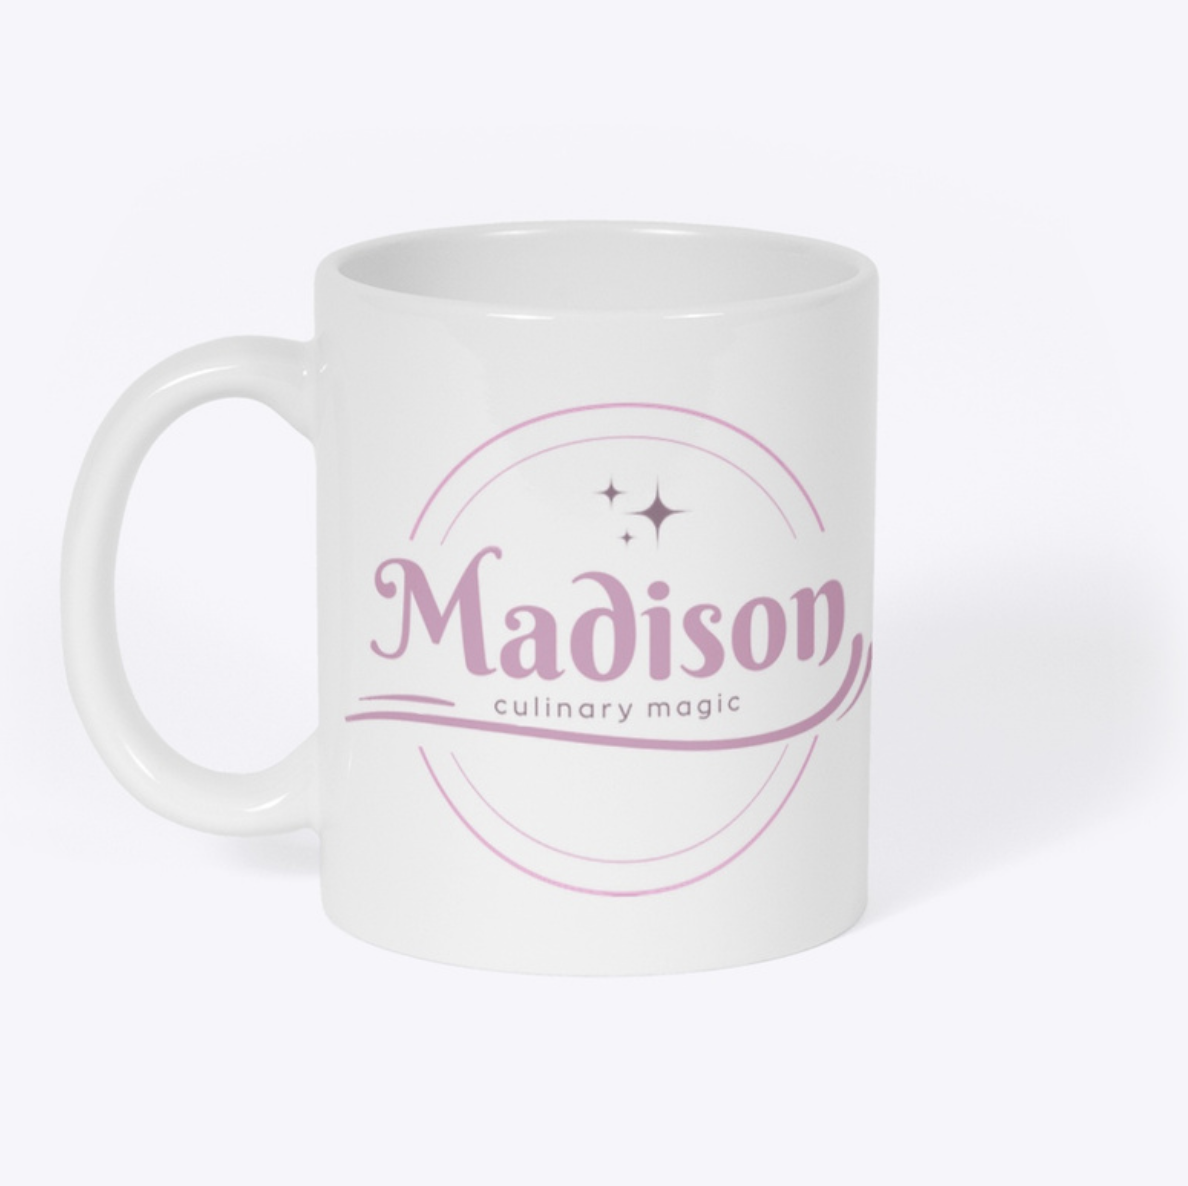 Madison Premade Logo